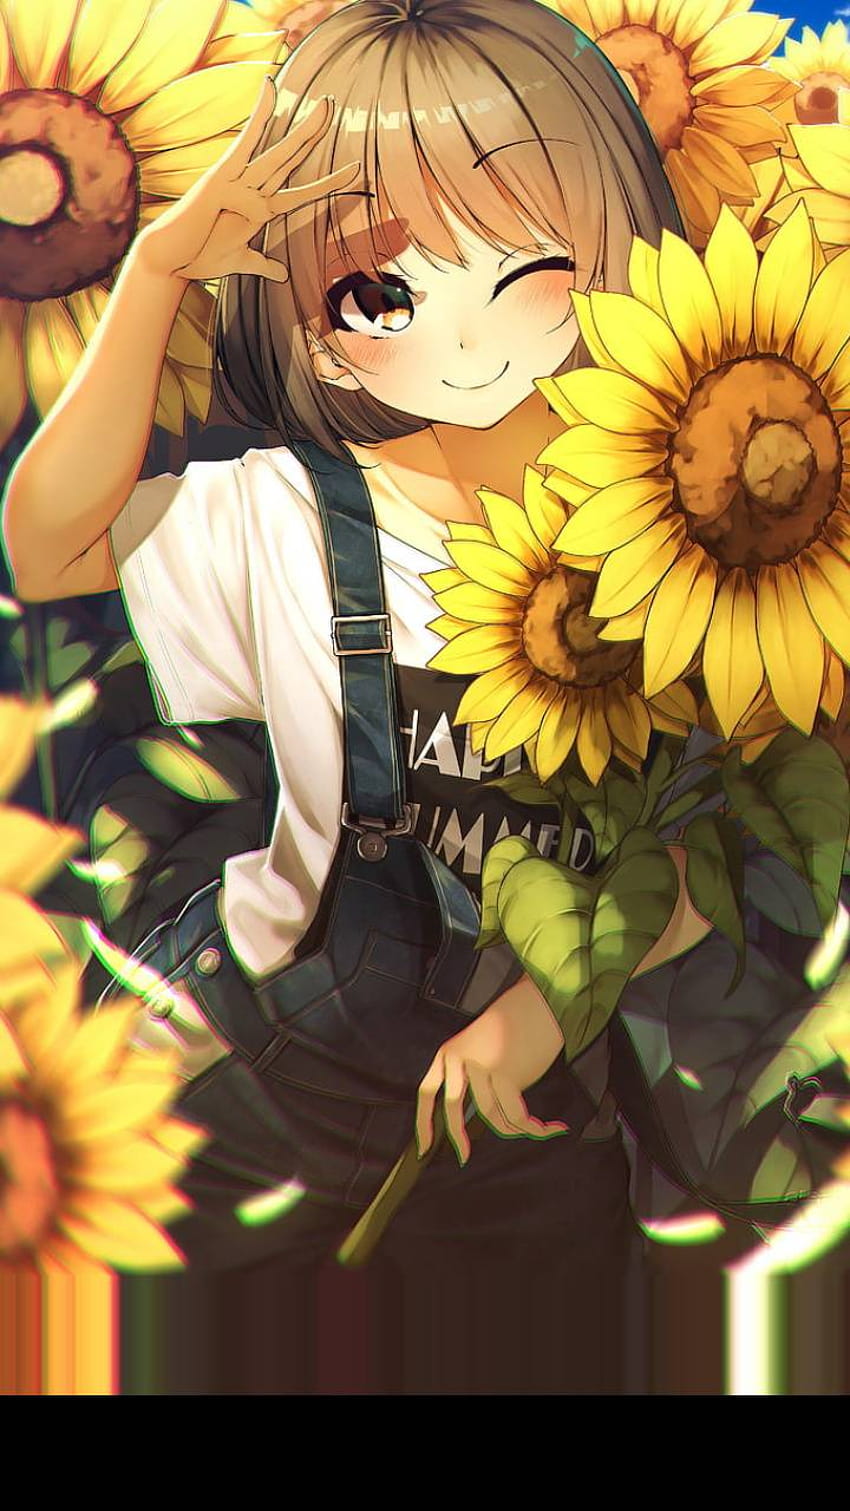 super cute anime girl by AI-NIJI on DeviantArt